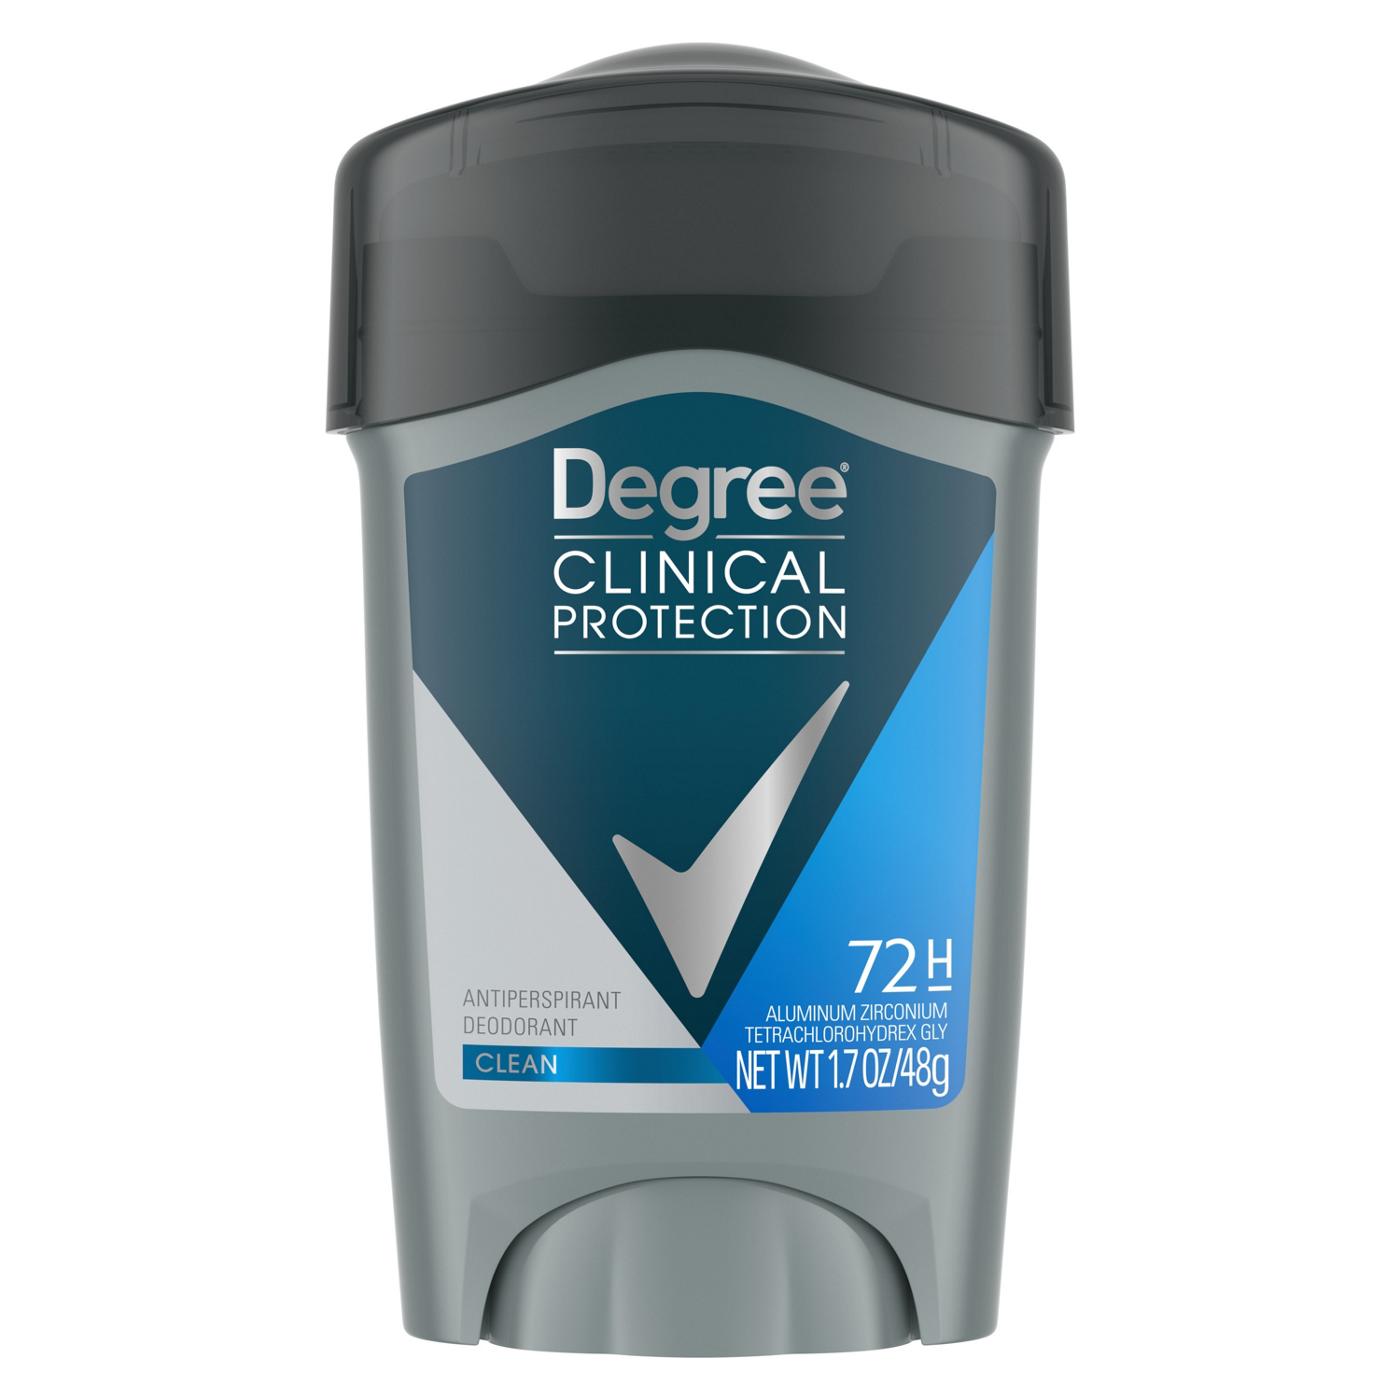 Degree Men Antiperspirant Deodorant - Clean; image 1 of 3